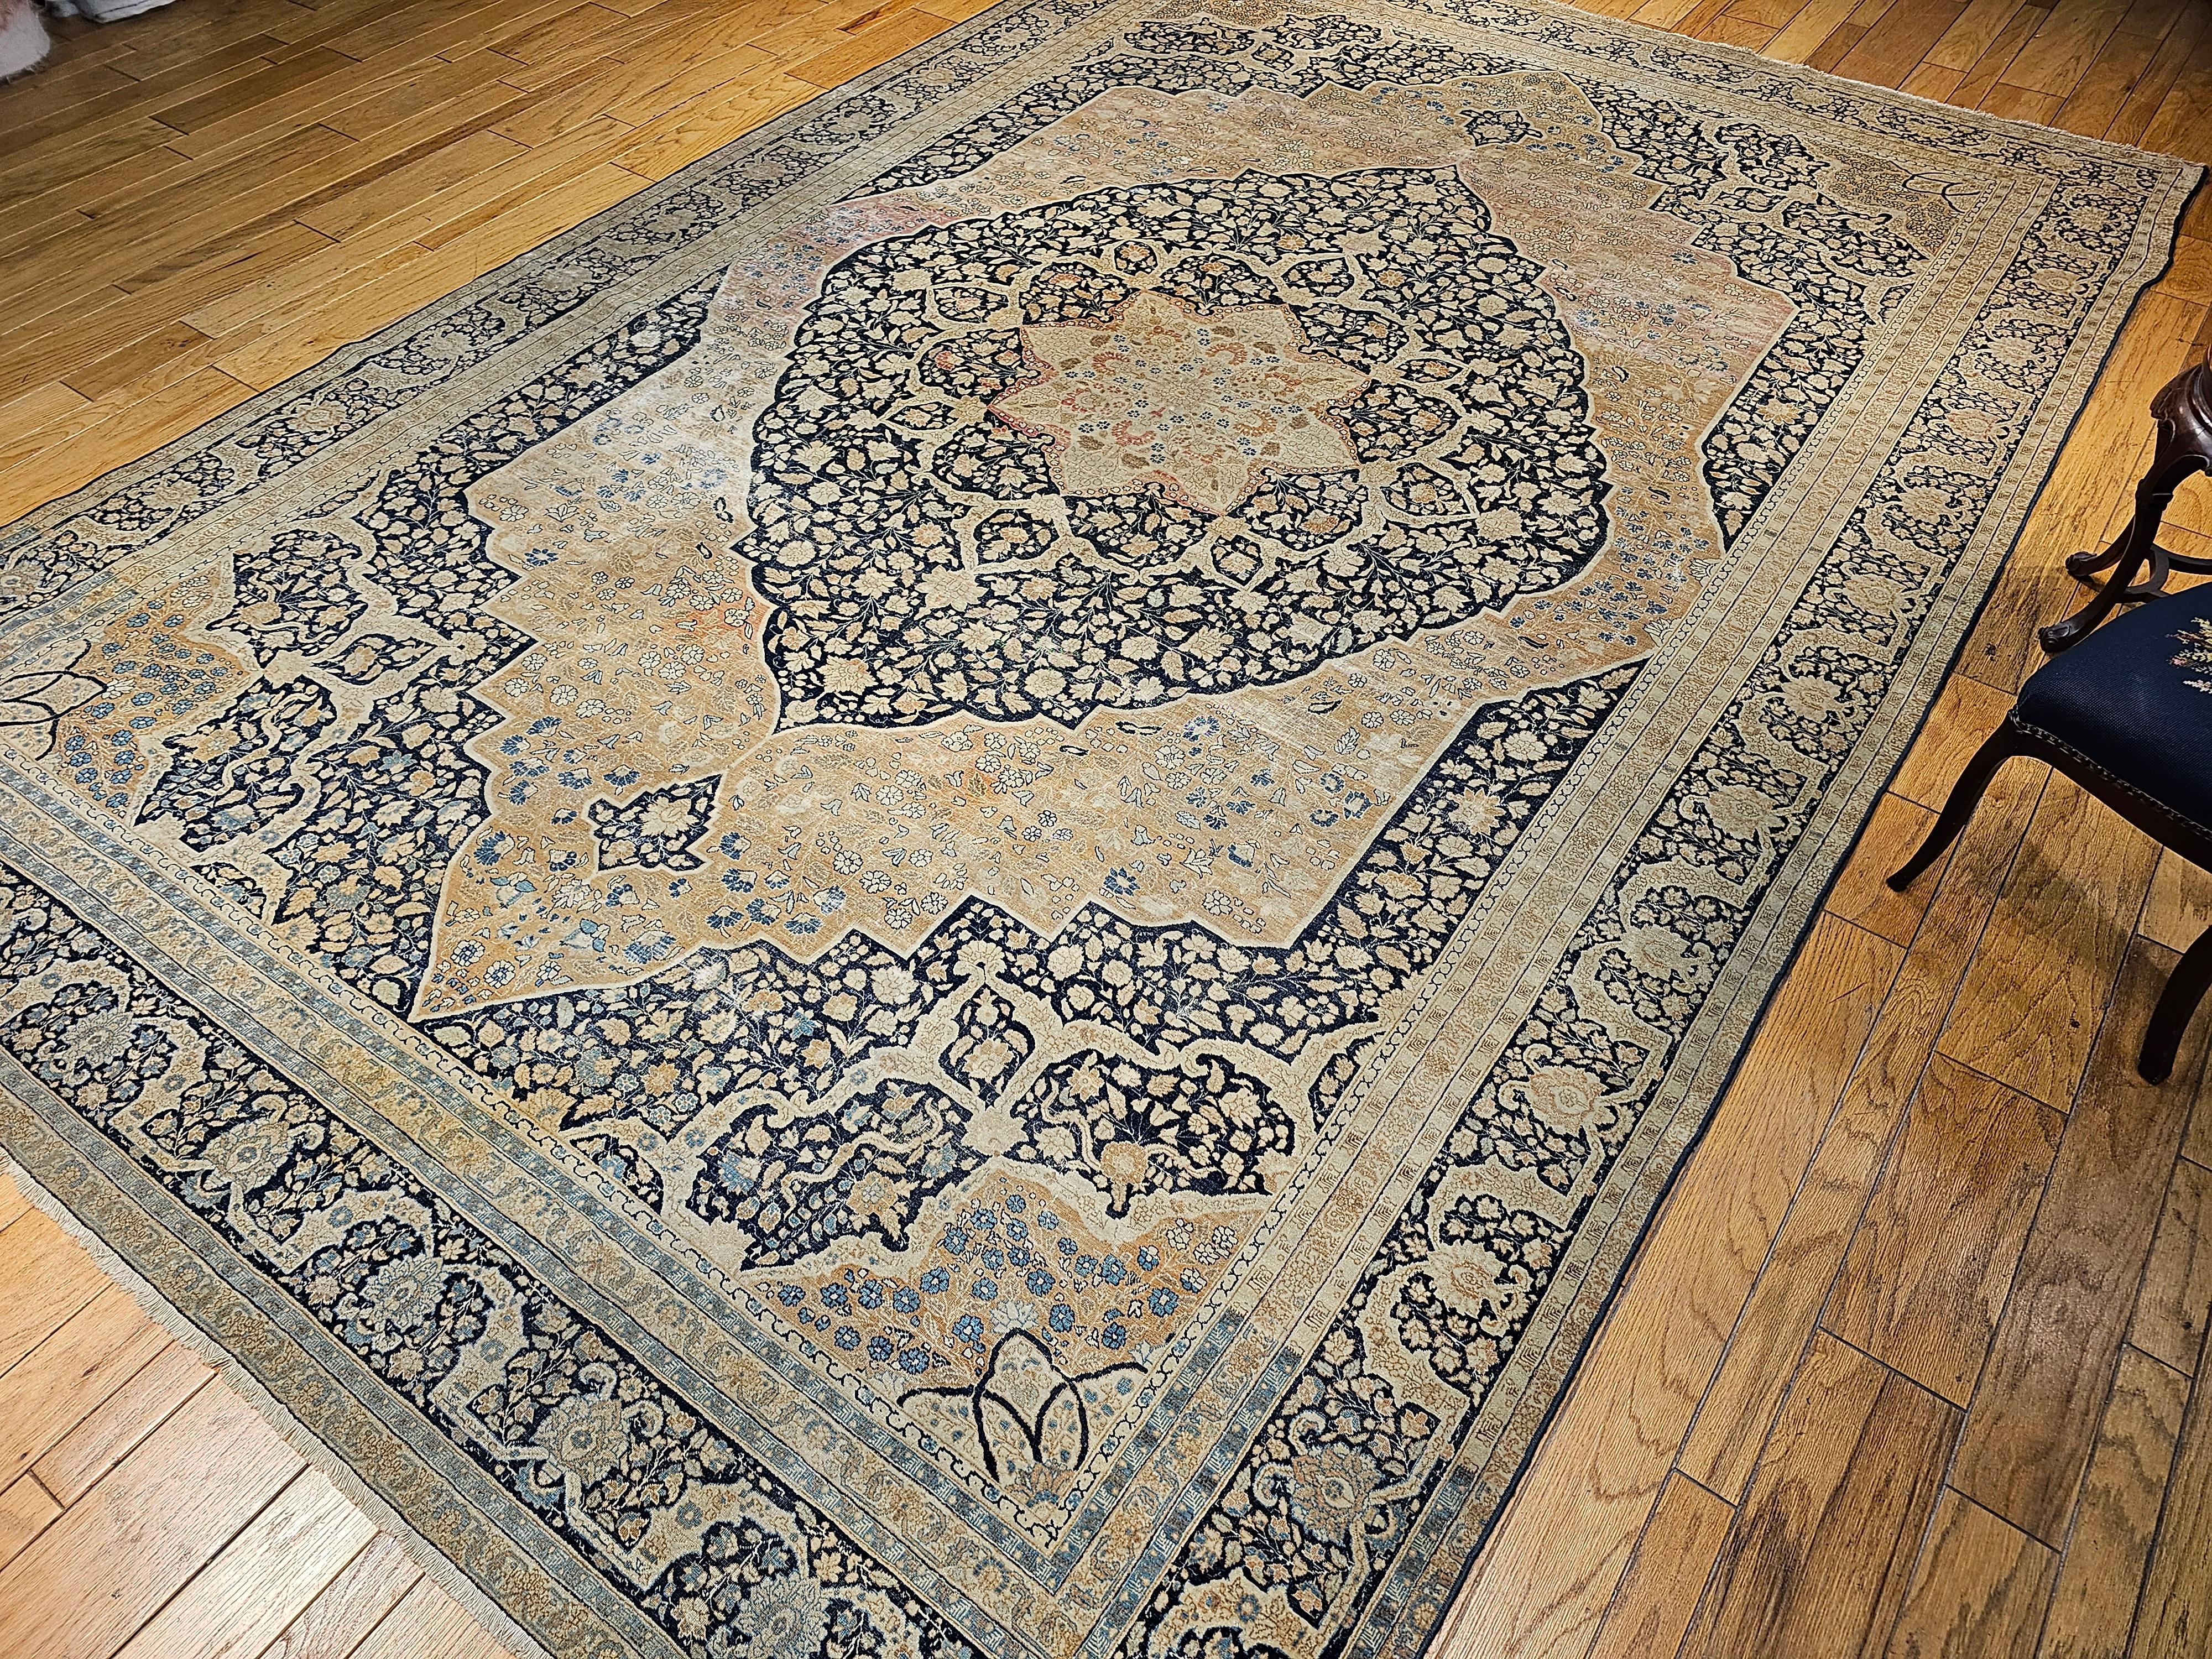 19th Century Persian Tabriz Haji Jalili Carpet in Navy, tan, Pale Red, Baby Blue For Sale 11